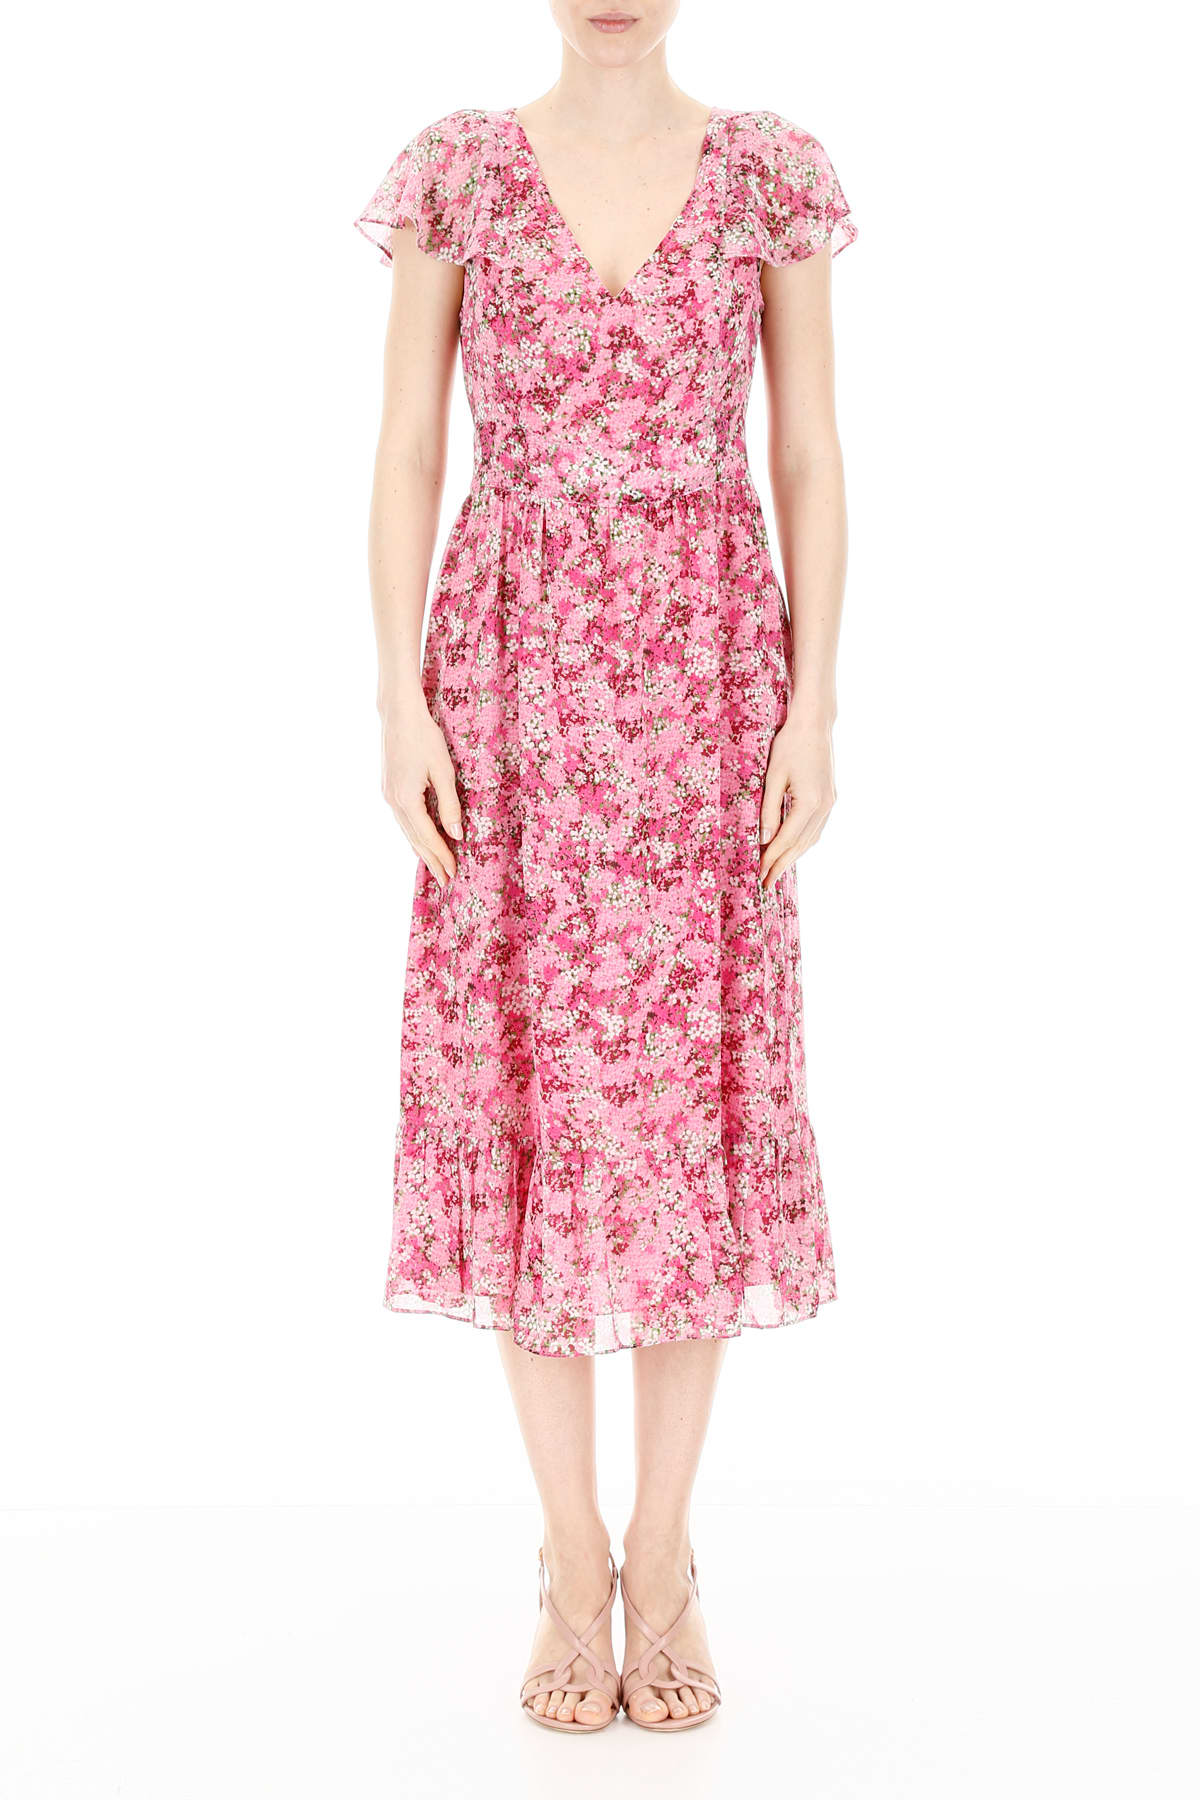 michael kors pink floral dress